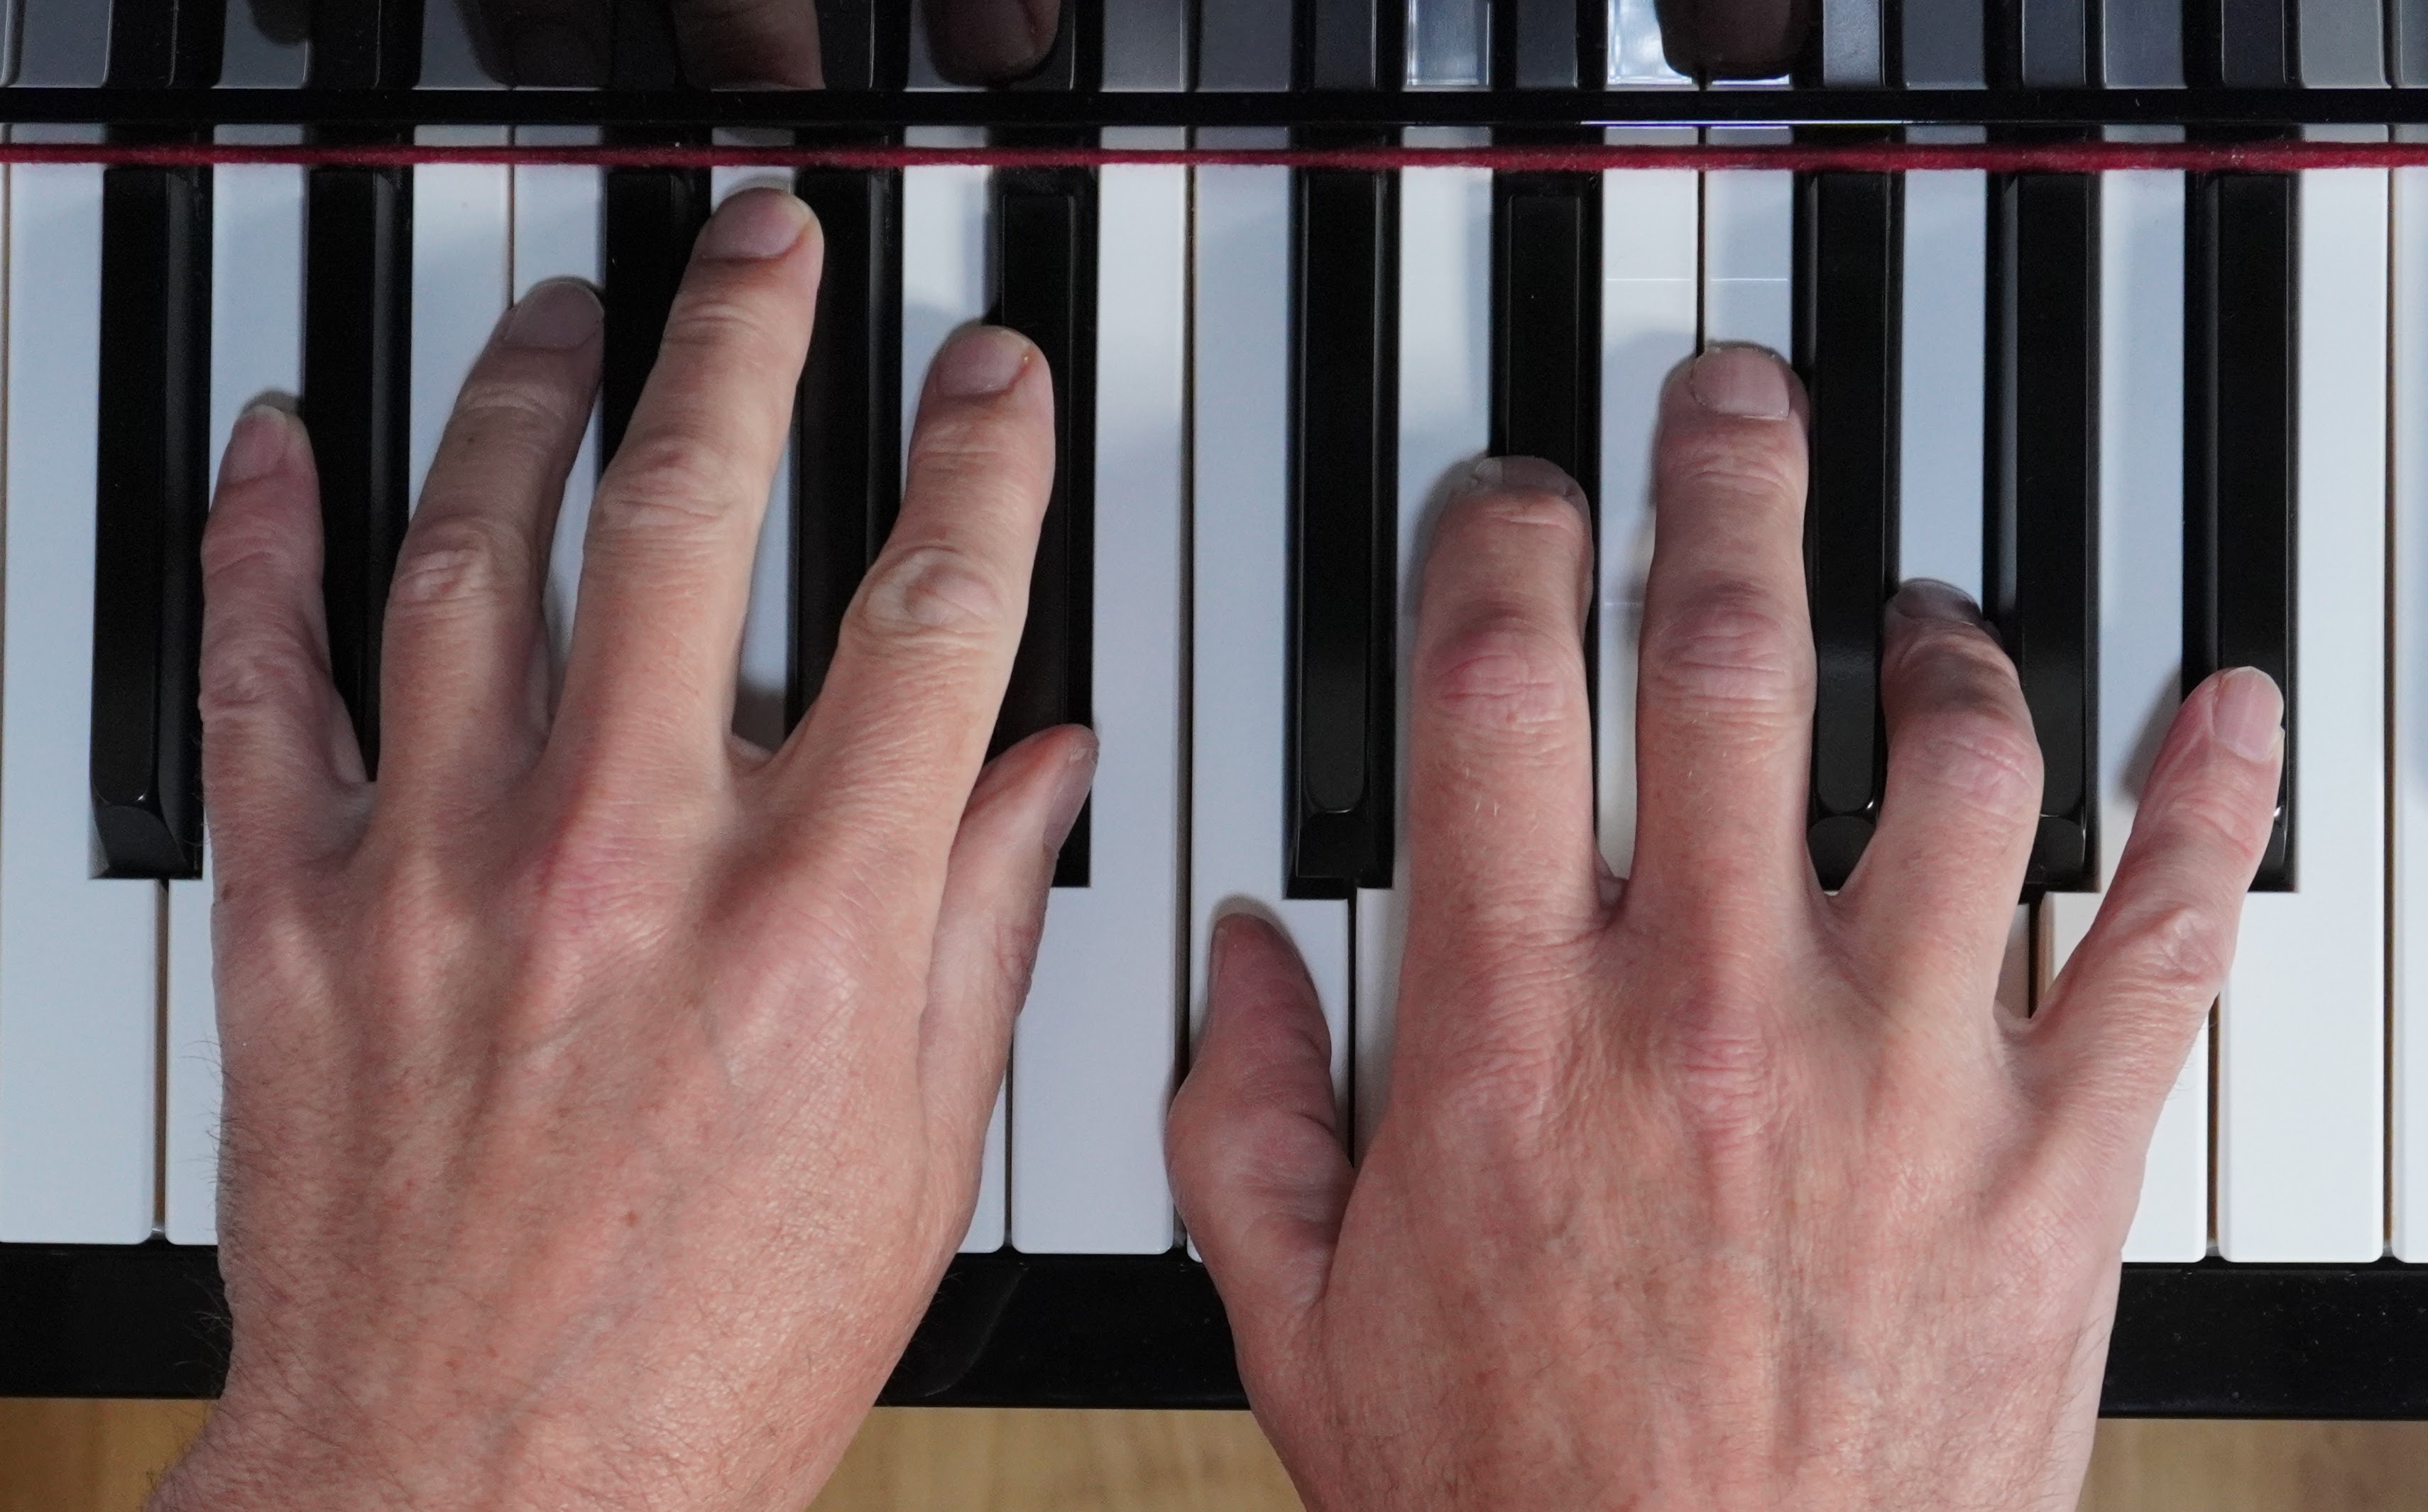 Julian Lamberts hands resting on a piano keyboard